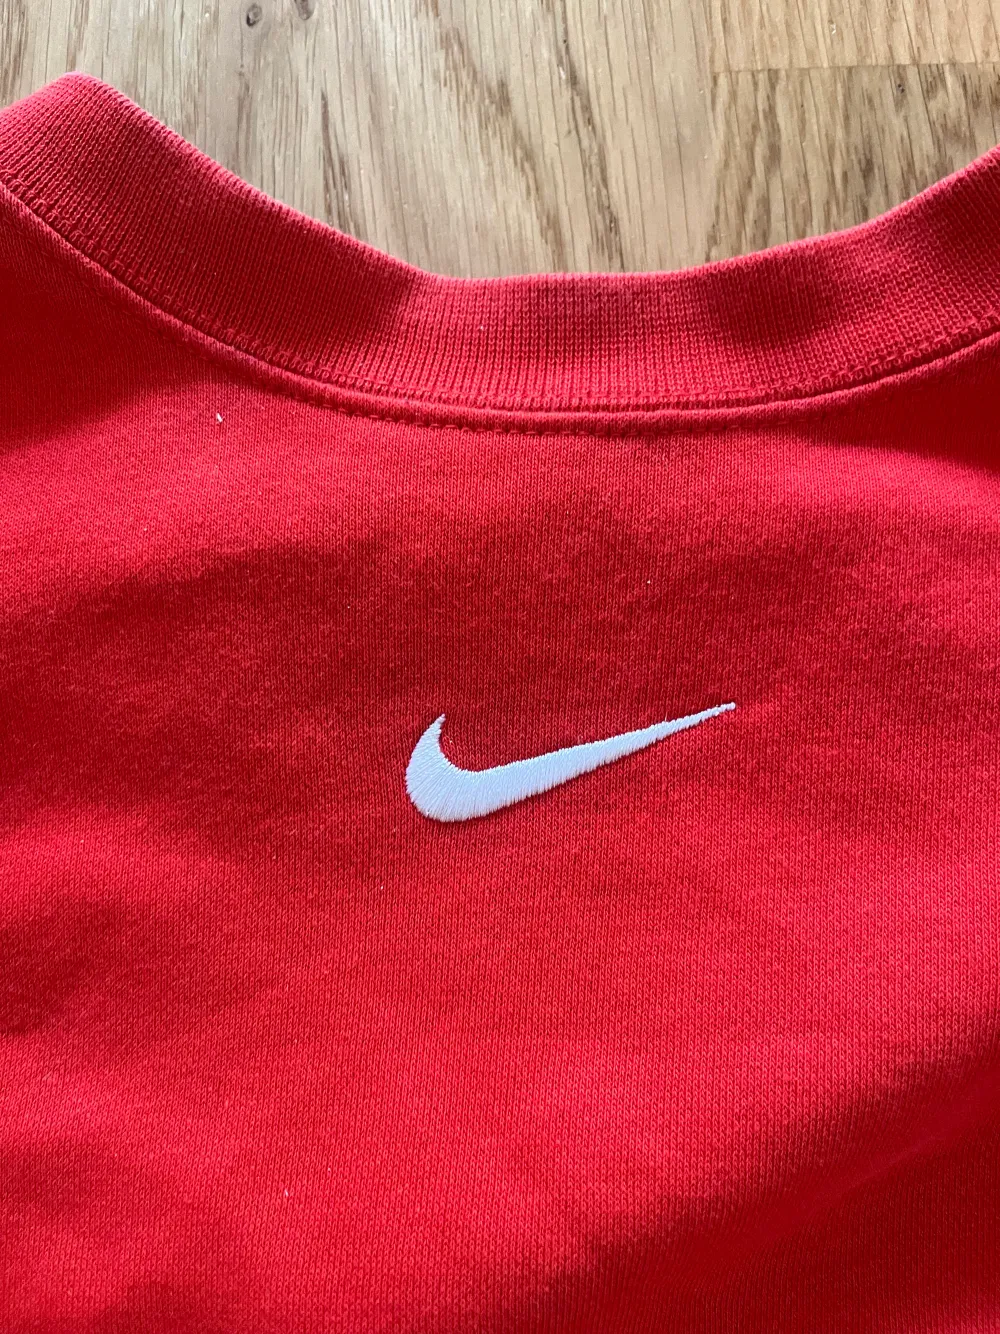 Oversized Nike sweatshirt, XS fits like a large. Hoodies.